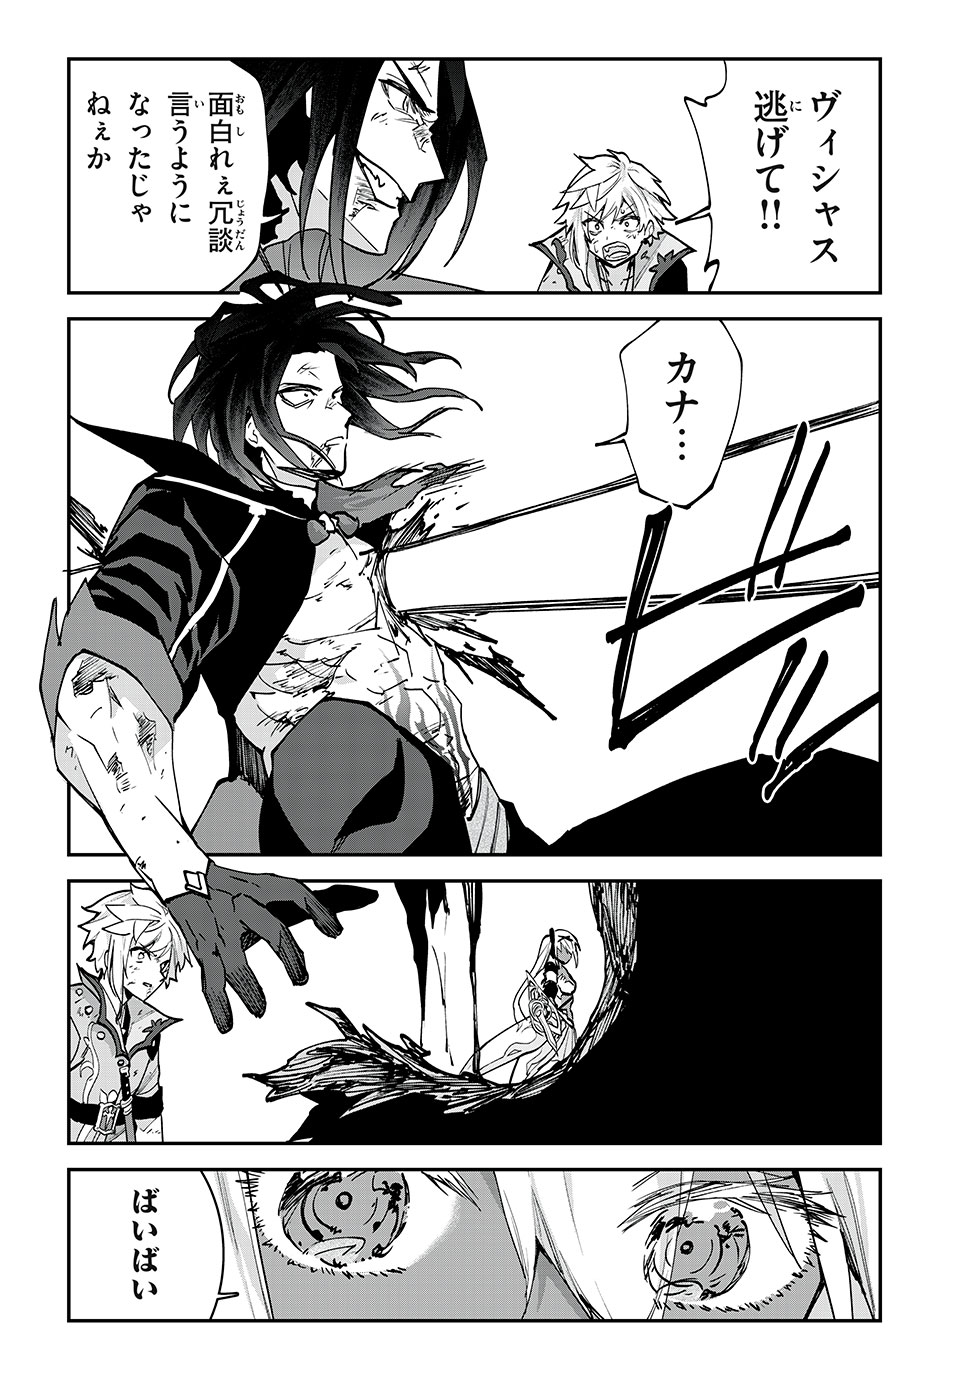 Tales of Crestoria – Togabito no Saika - Chapter 40 - Page 2